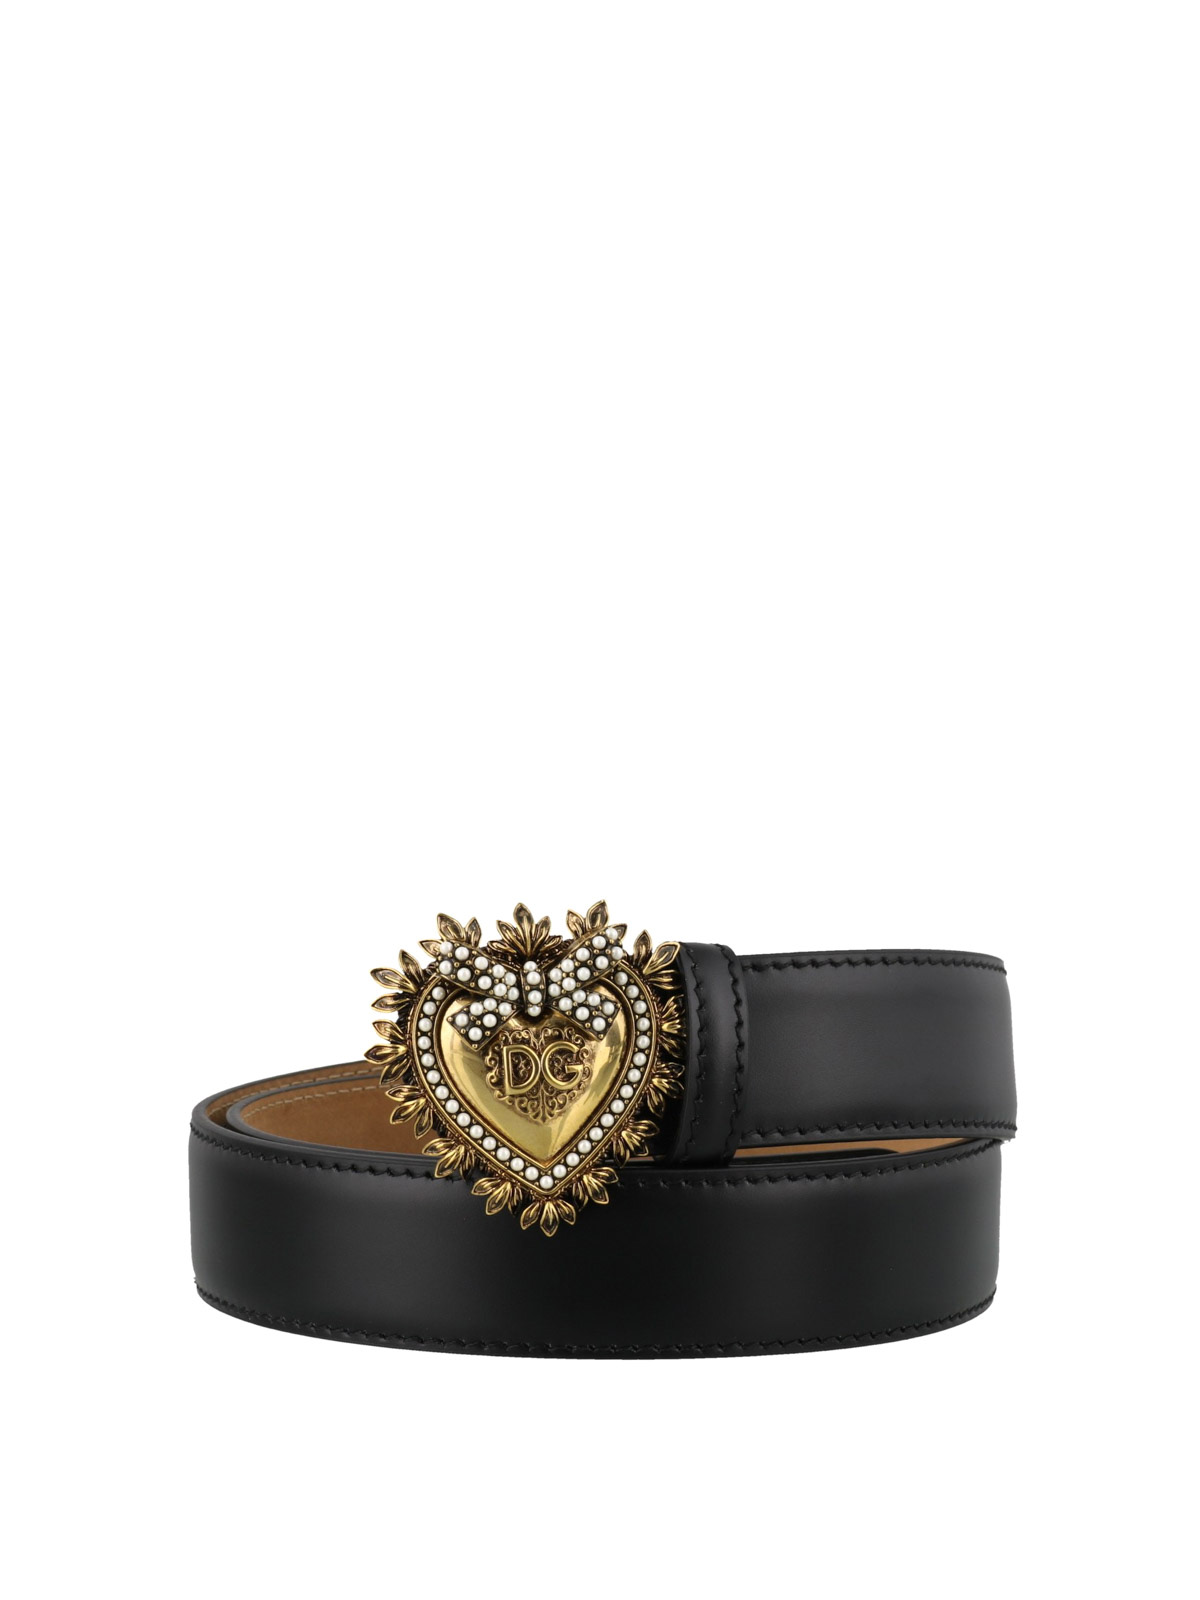 Dolce & Gabbana Devotion Black Belt